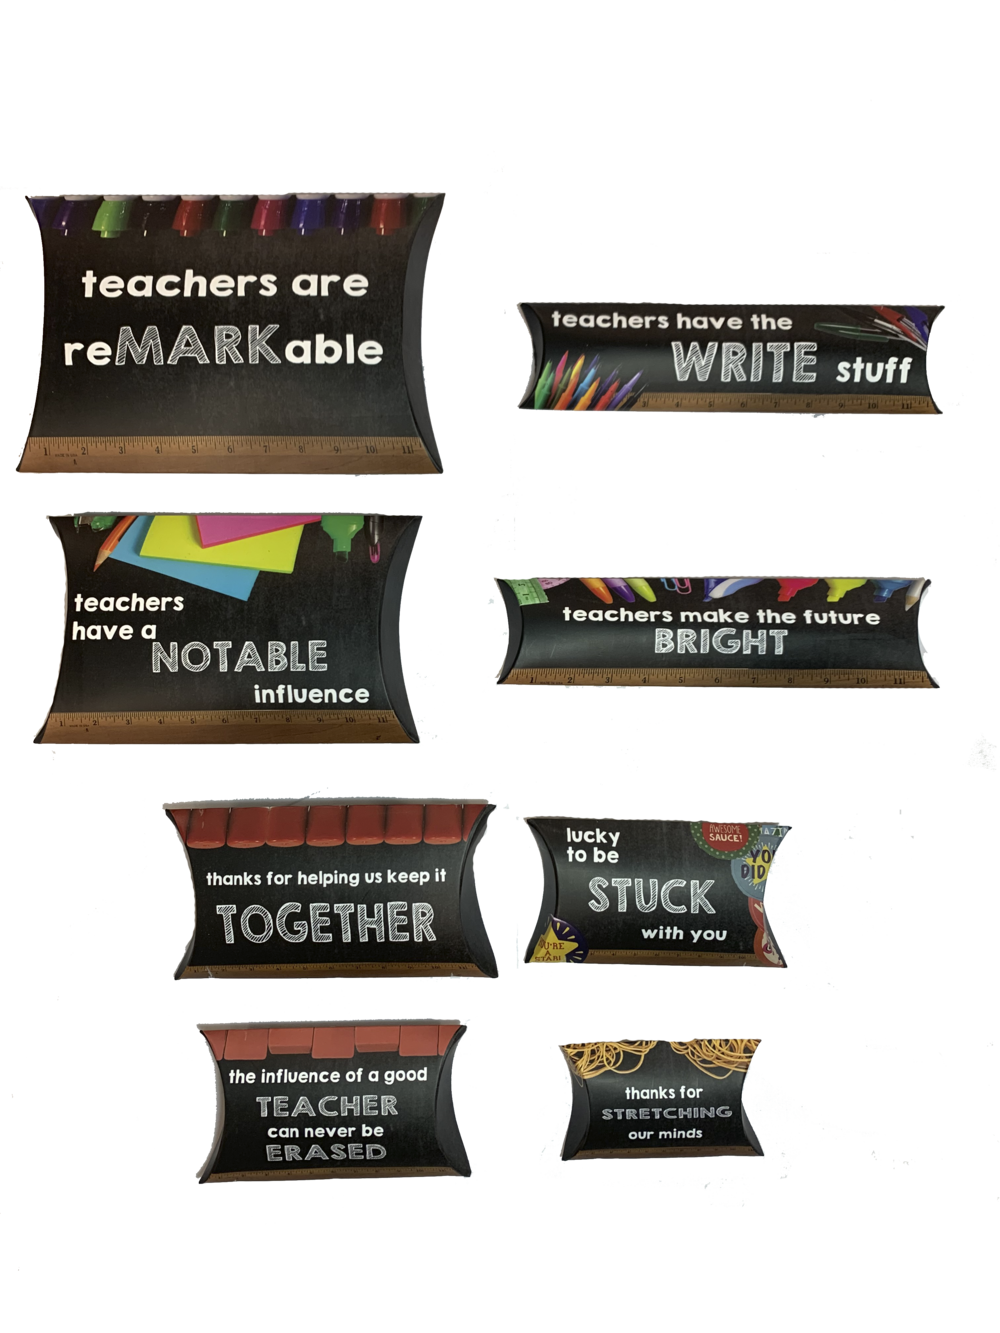 Glue Sticks and School Glue — Campus Survival Kits and Insta-Kits